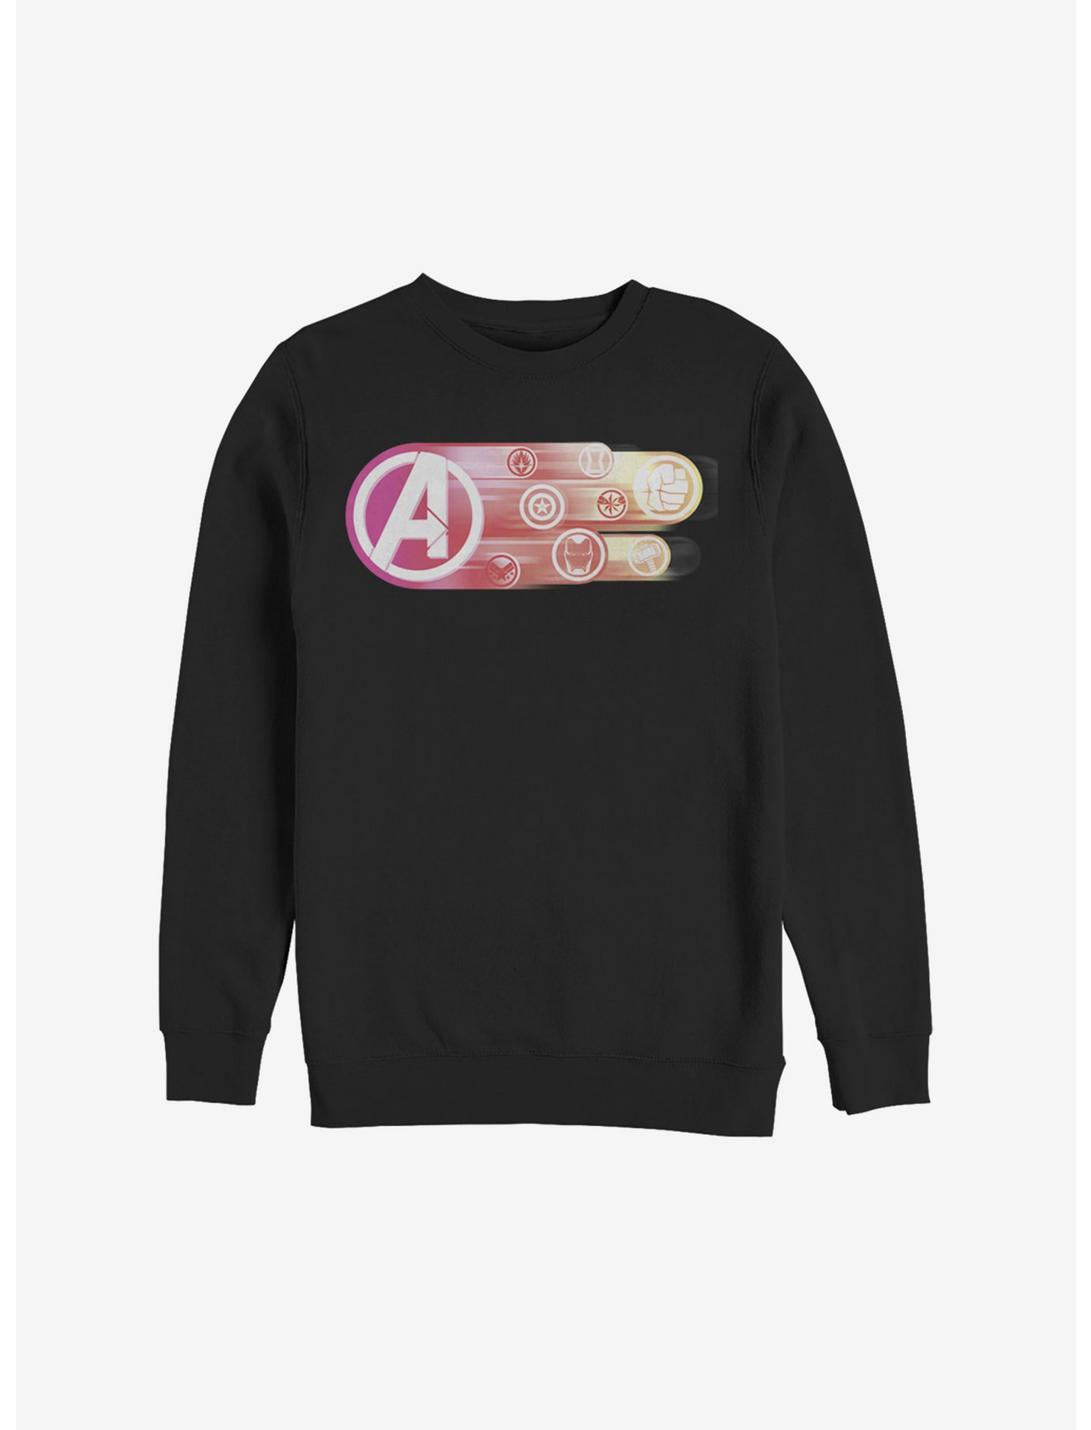 Marvel Avengers: Endgame Icons Sweatshirt, BLACK, hi-res